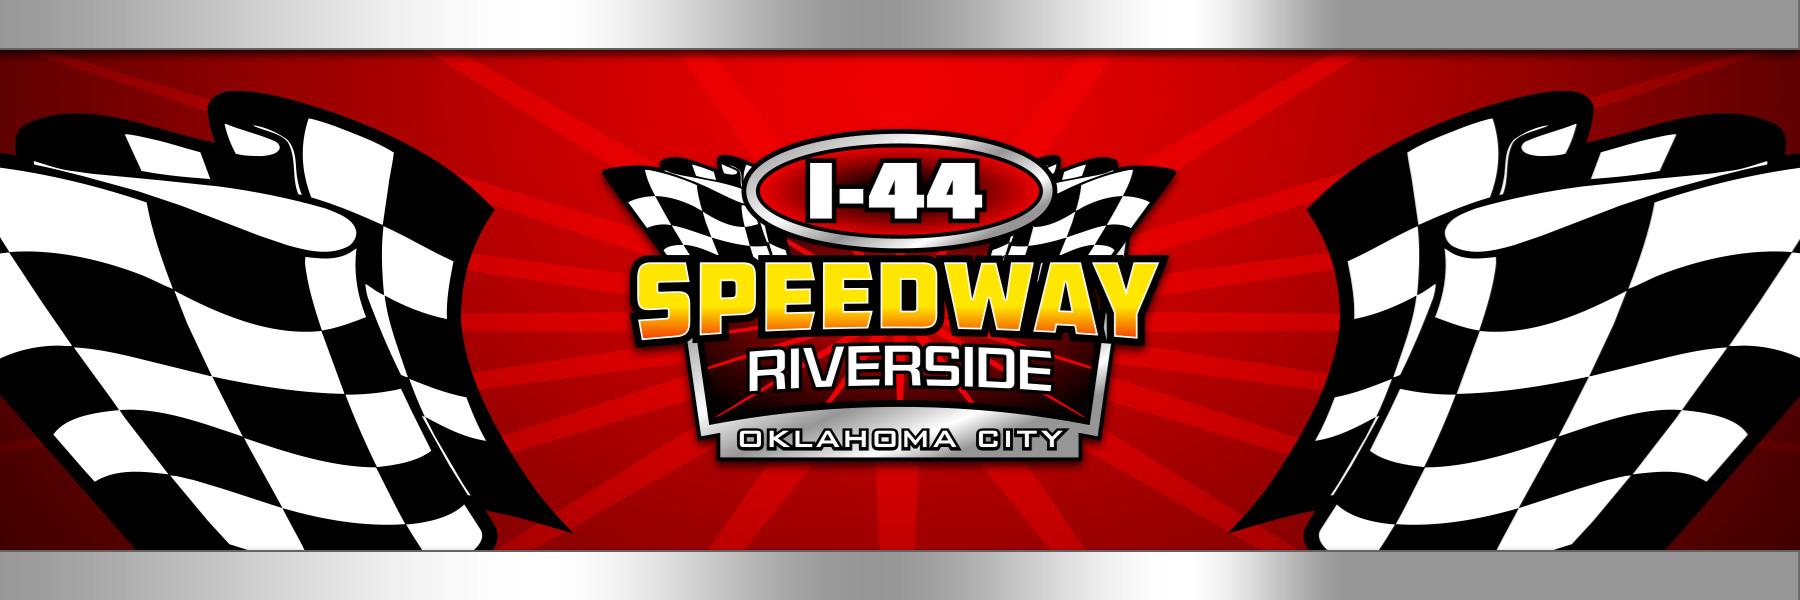 5/22/2021 - I-44 Riverside Speedway